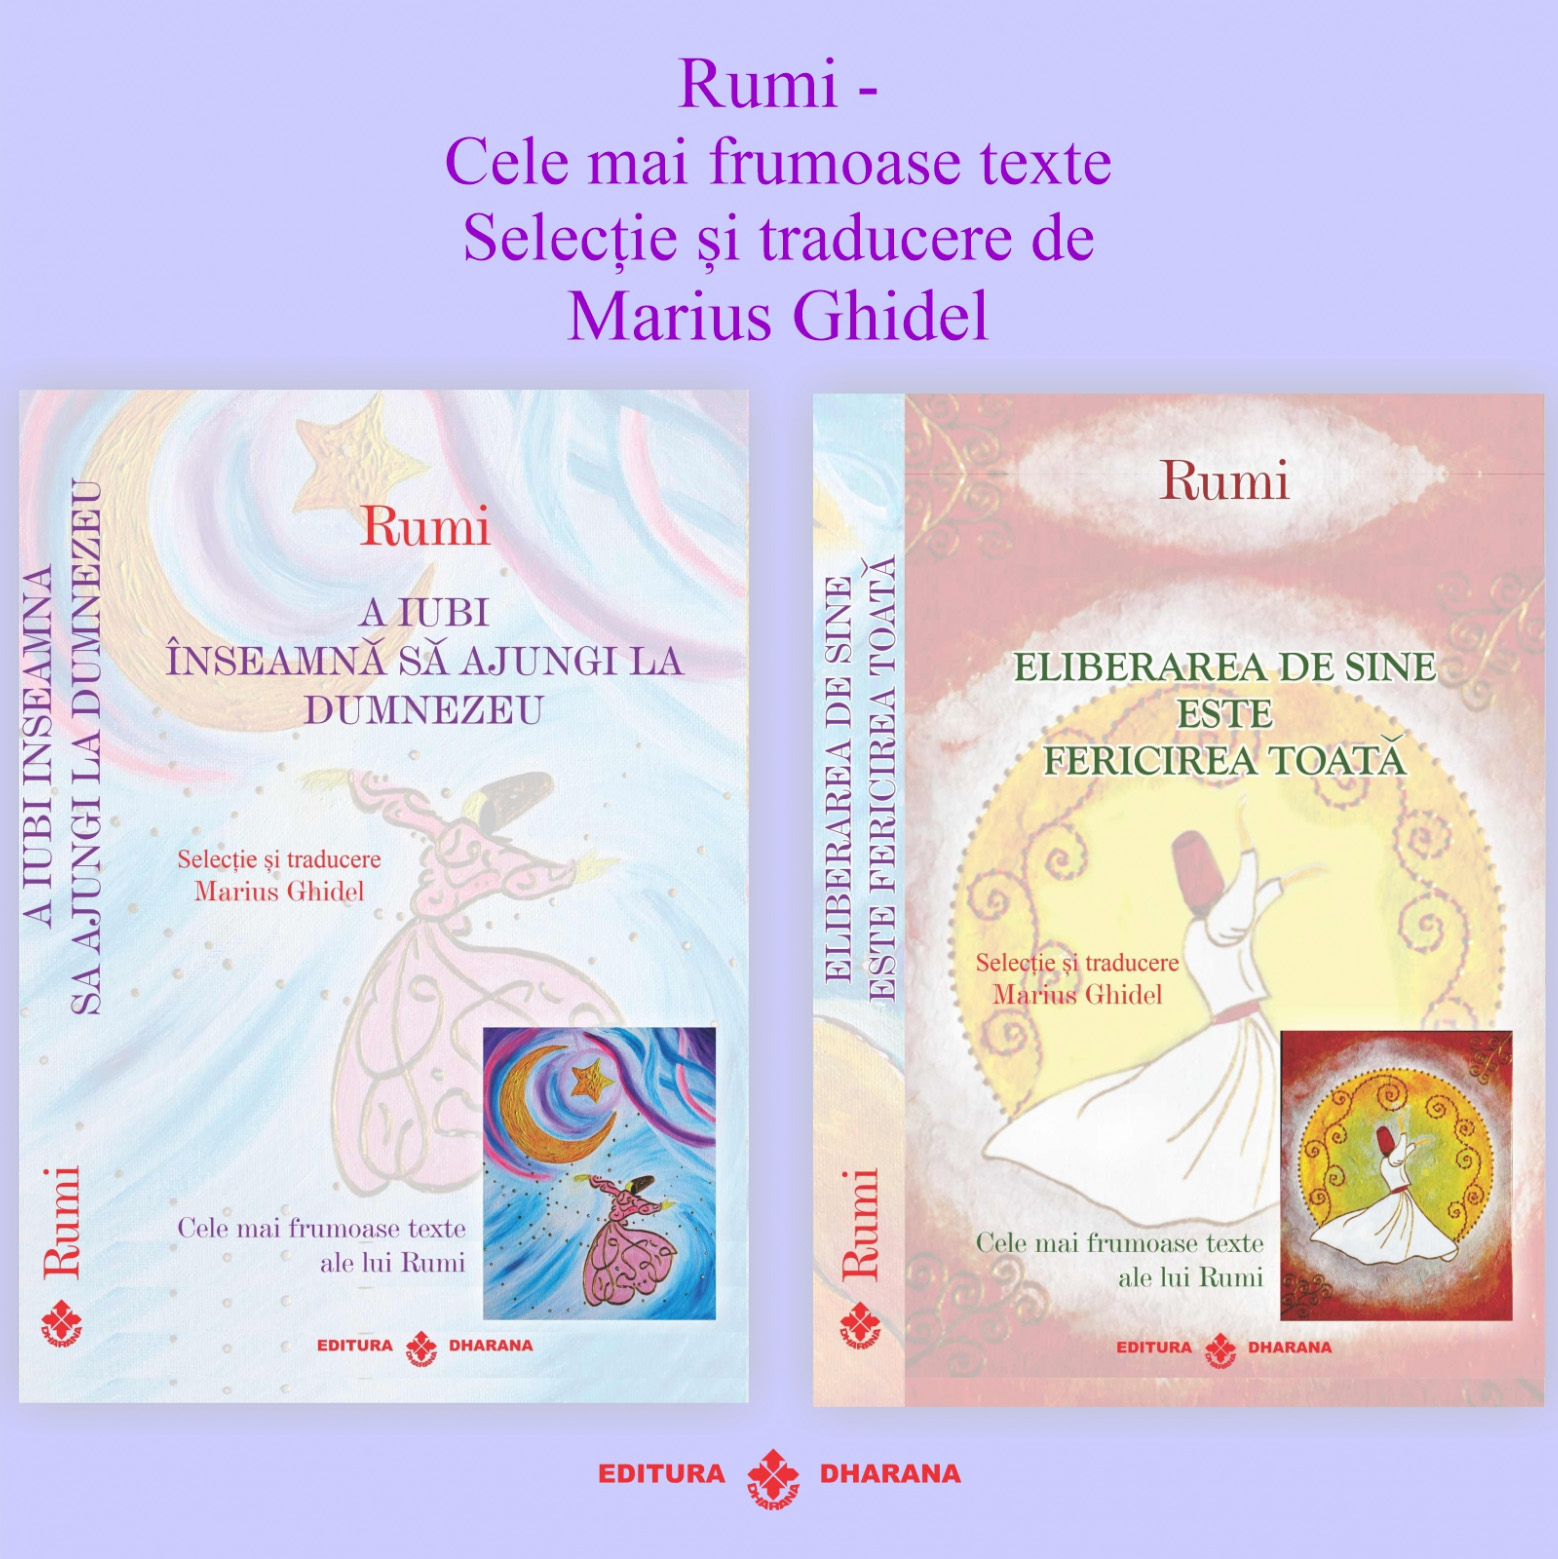 Set carti Rumi – Cele mai frumoase texte: A iubi inseamna sa ajungi la Dumnezeu / Eliberarea de sine este fericirea toata | Rumi carturesti.ro poza bestsellers.ro